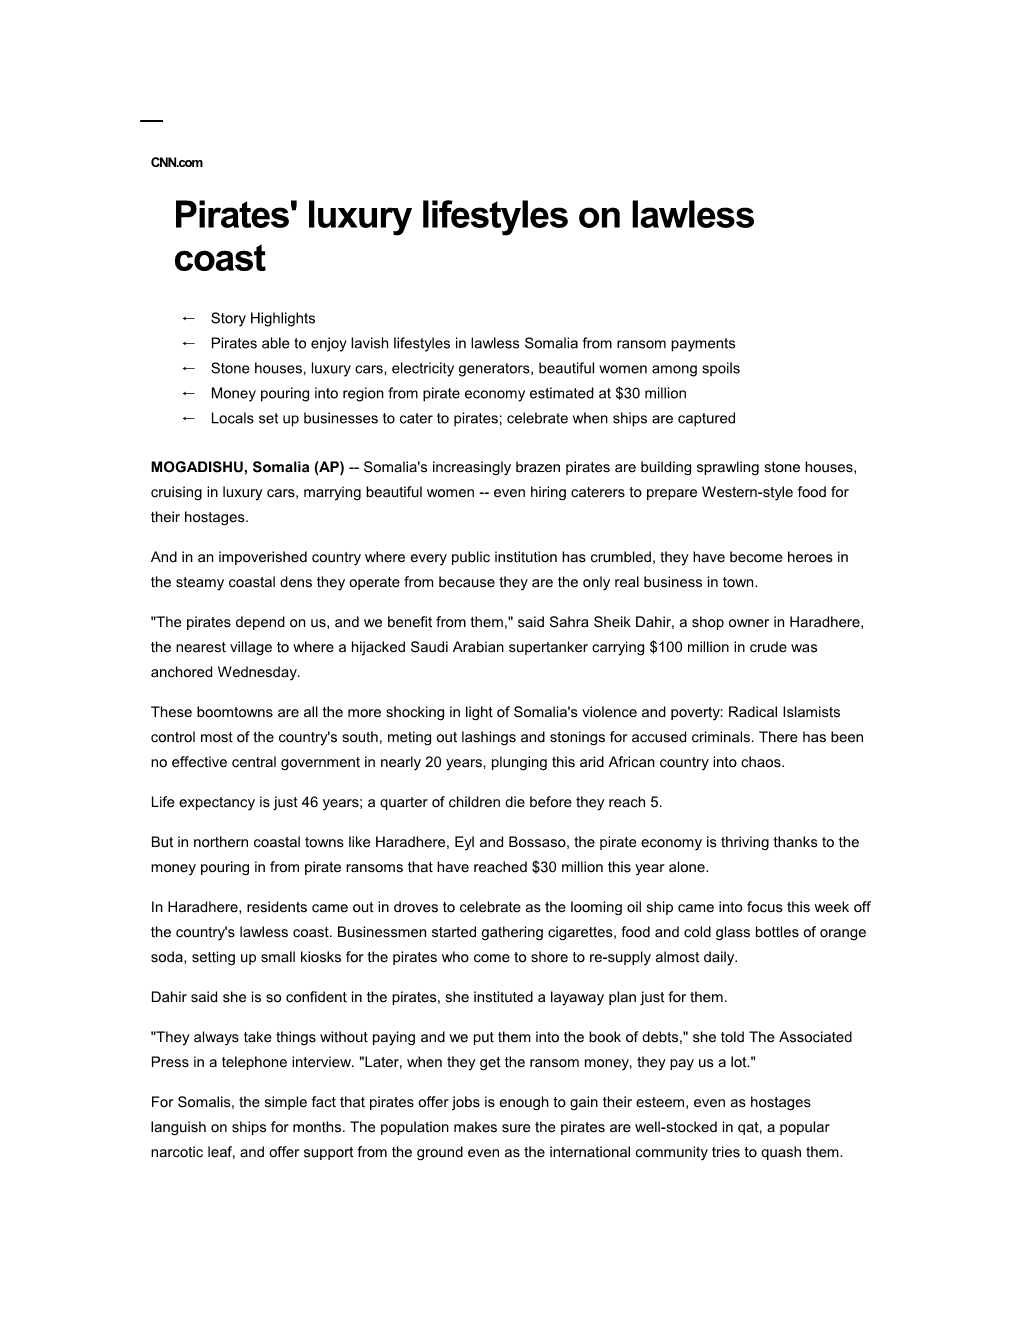 Pirates' Luxury Lifestyles on Lawless Coast